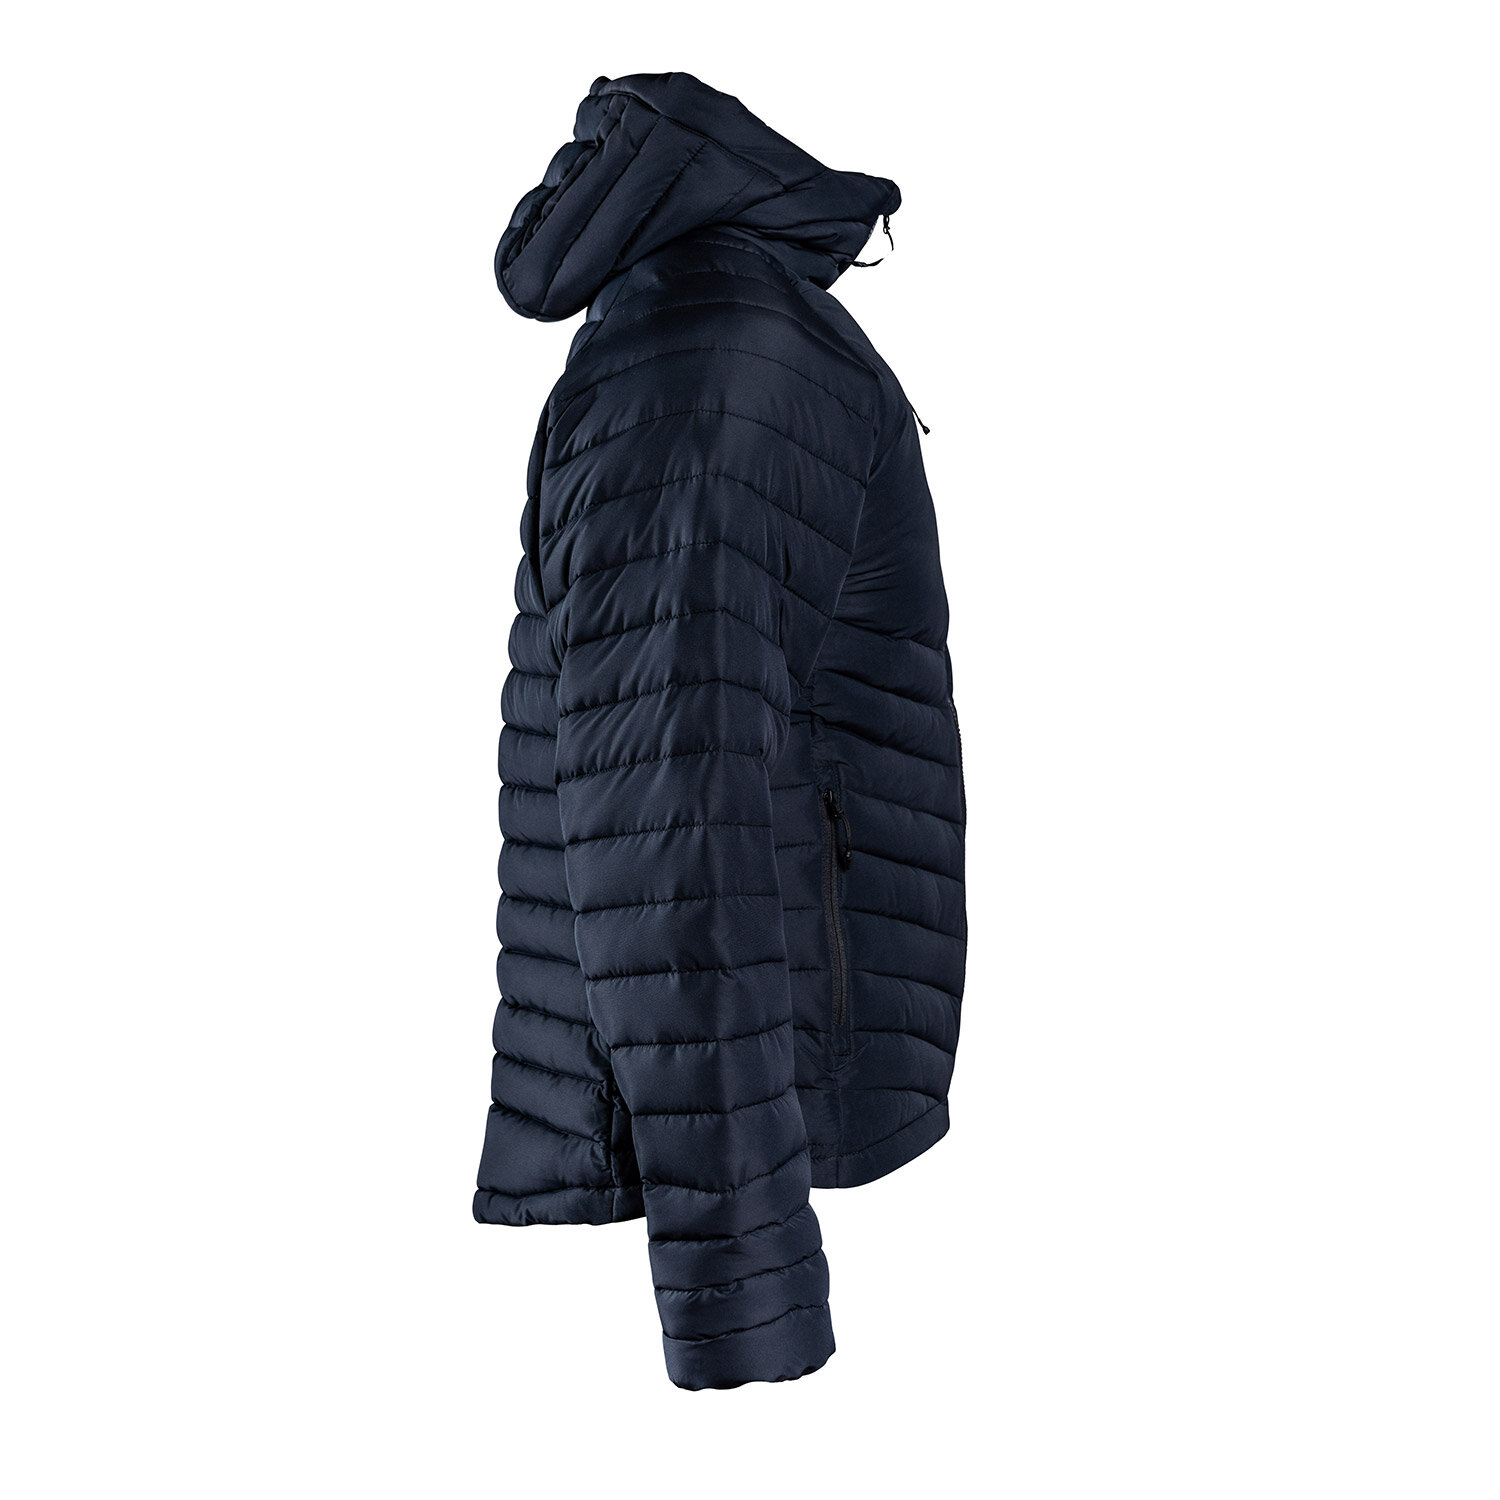 CLN Heat jacket Midnight black